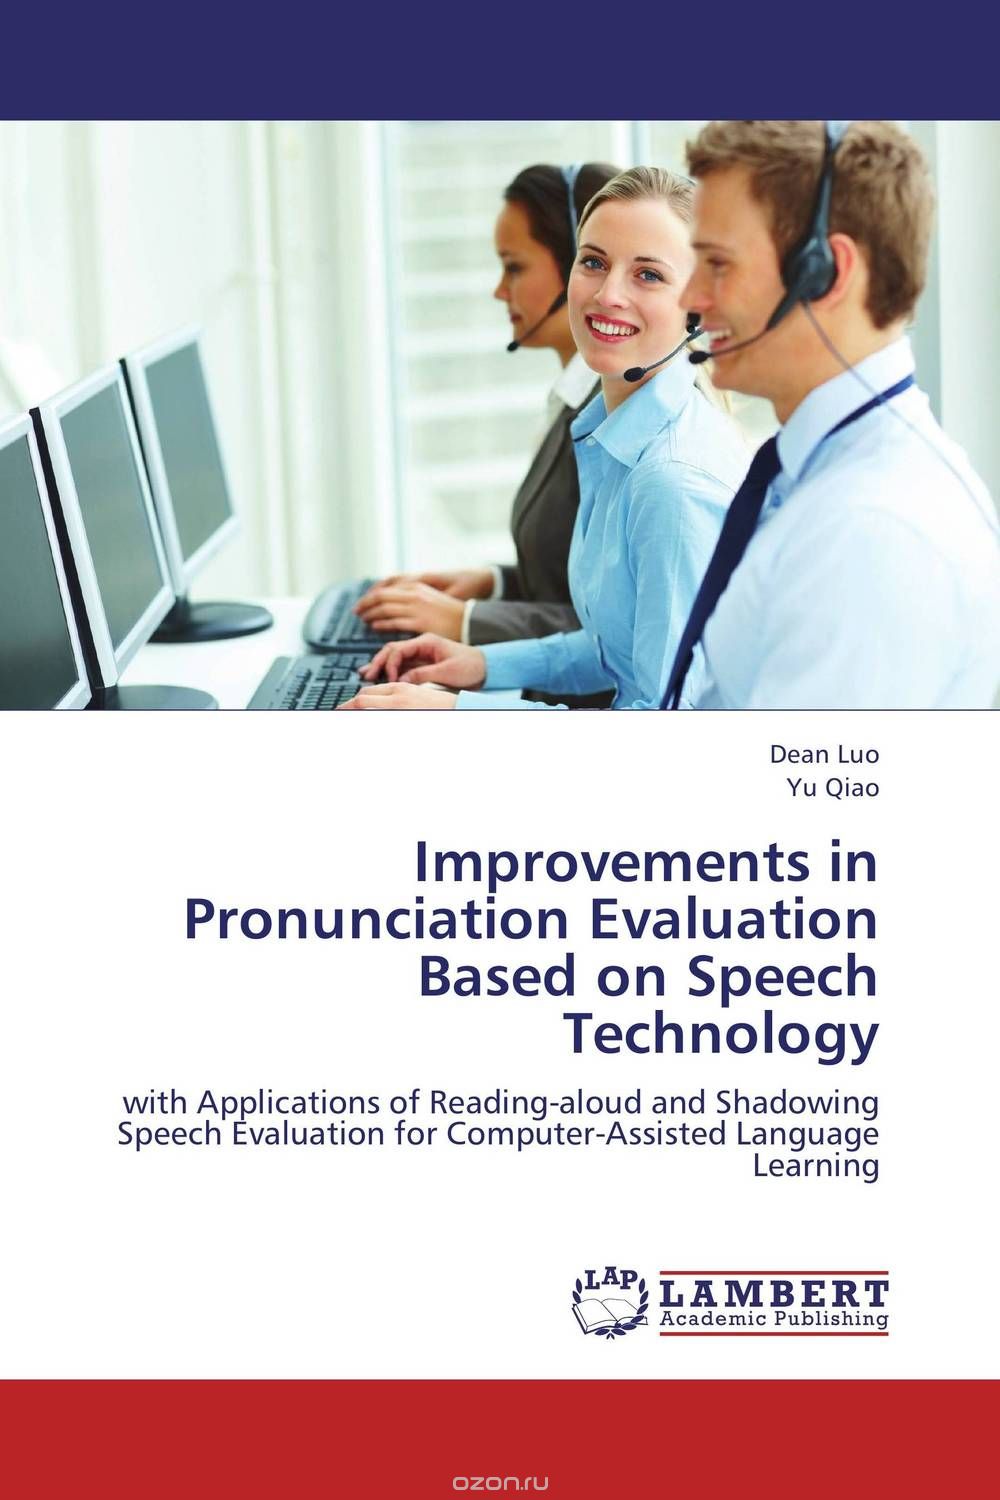 Скачать книгу "Improvements in Pronunciation Evaluation Based on Speech Technology"